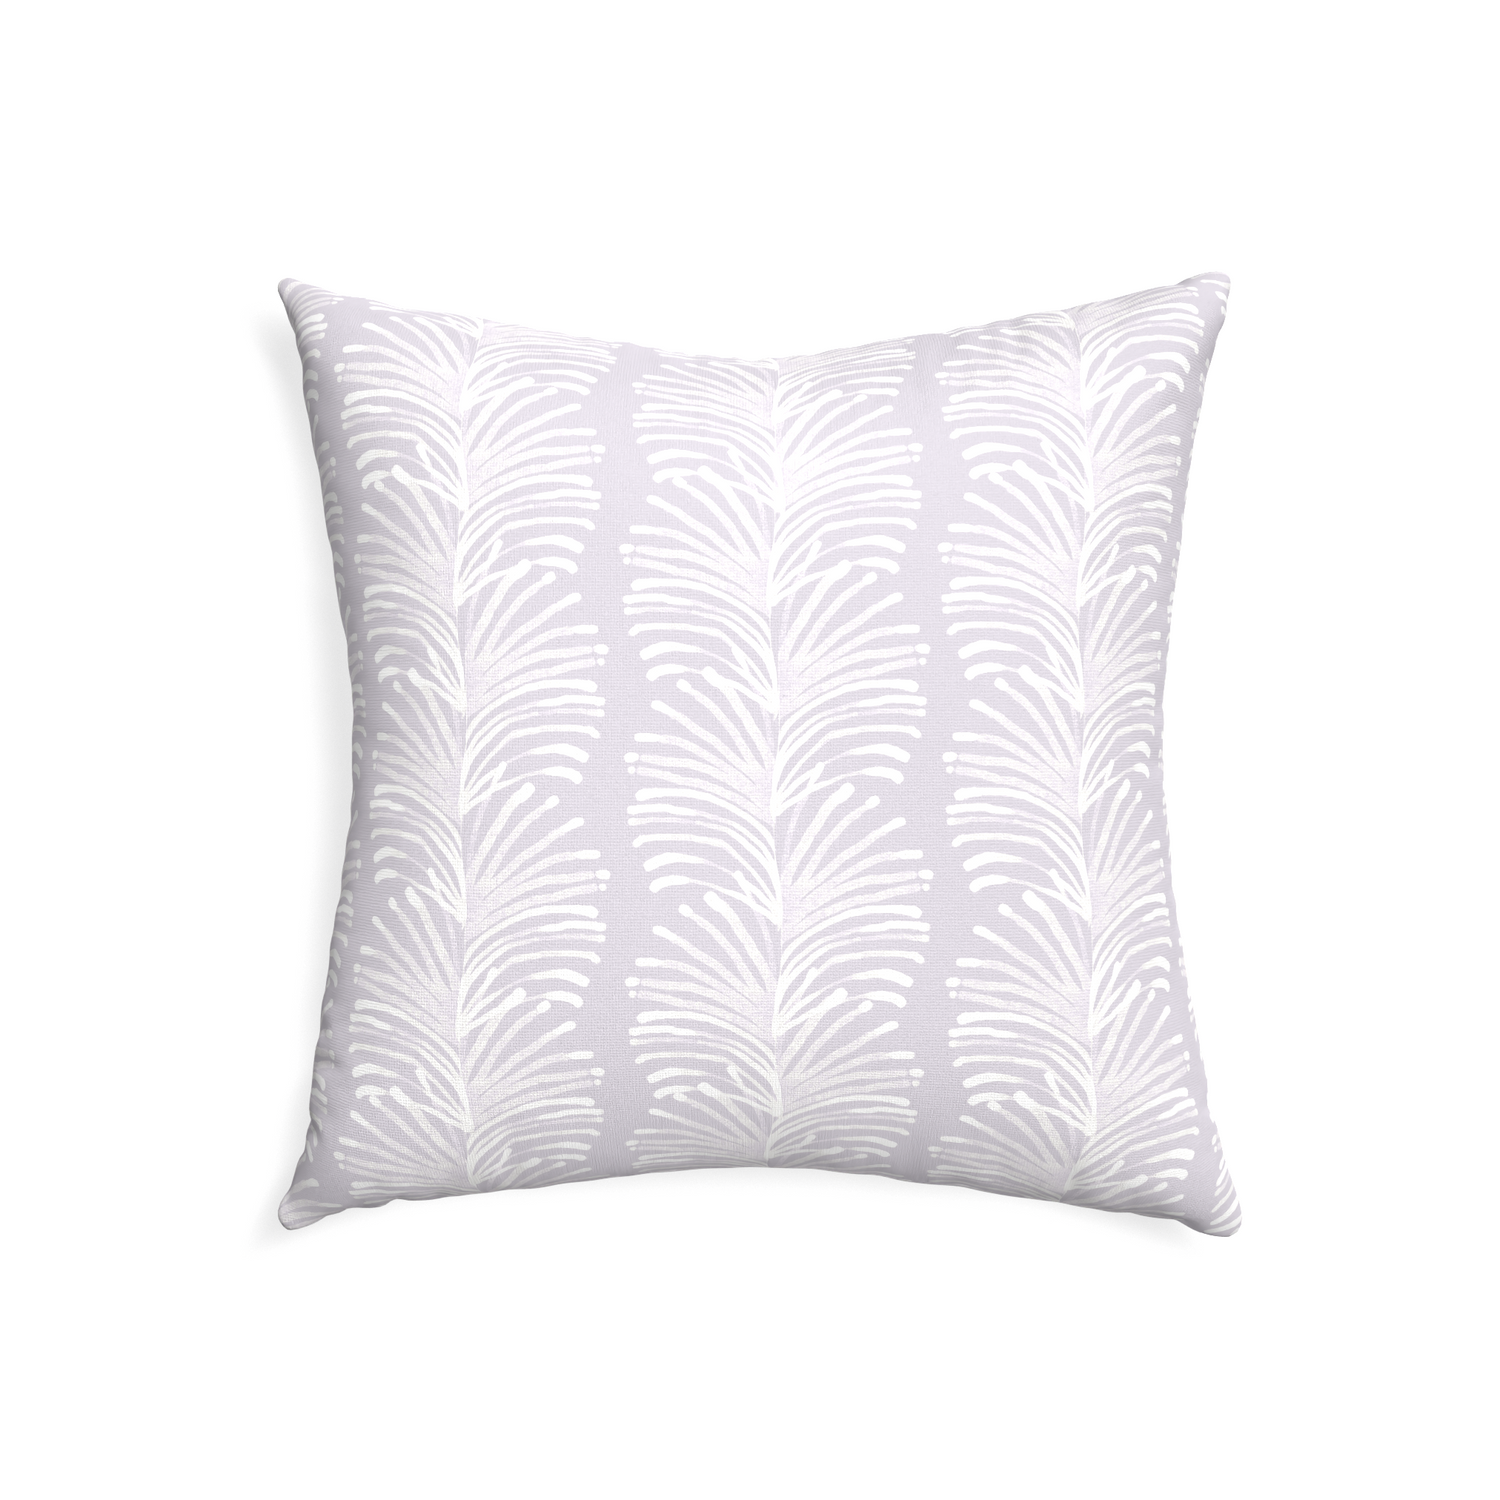 22-square emma lavender custom lavender botanical stripepillow with none on white background